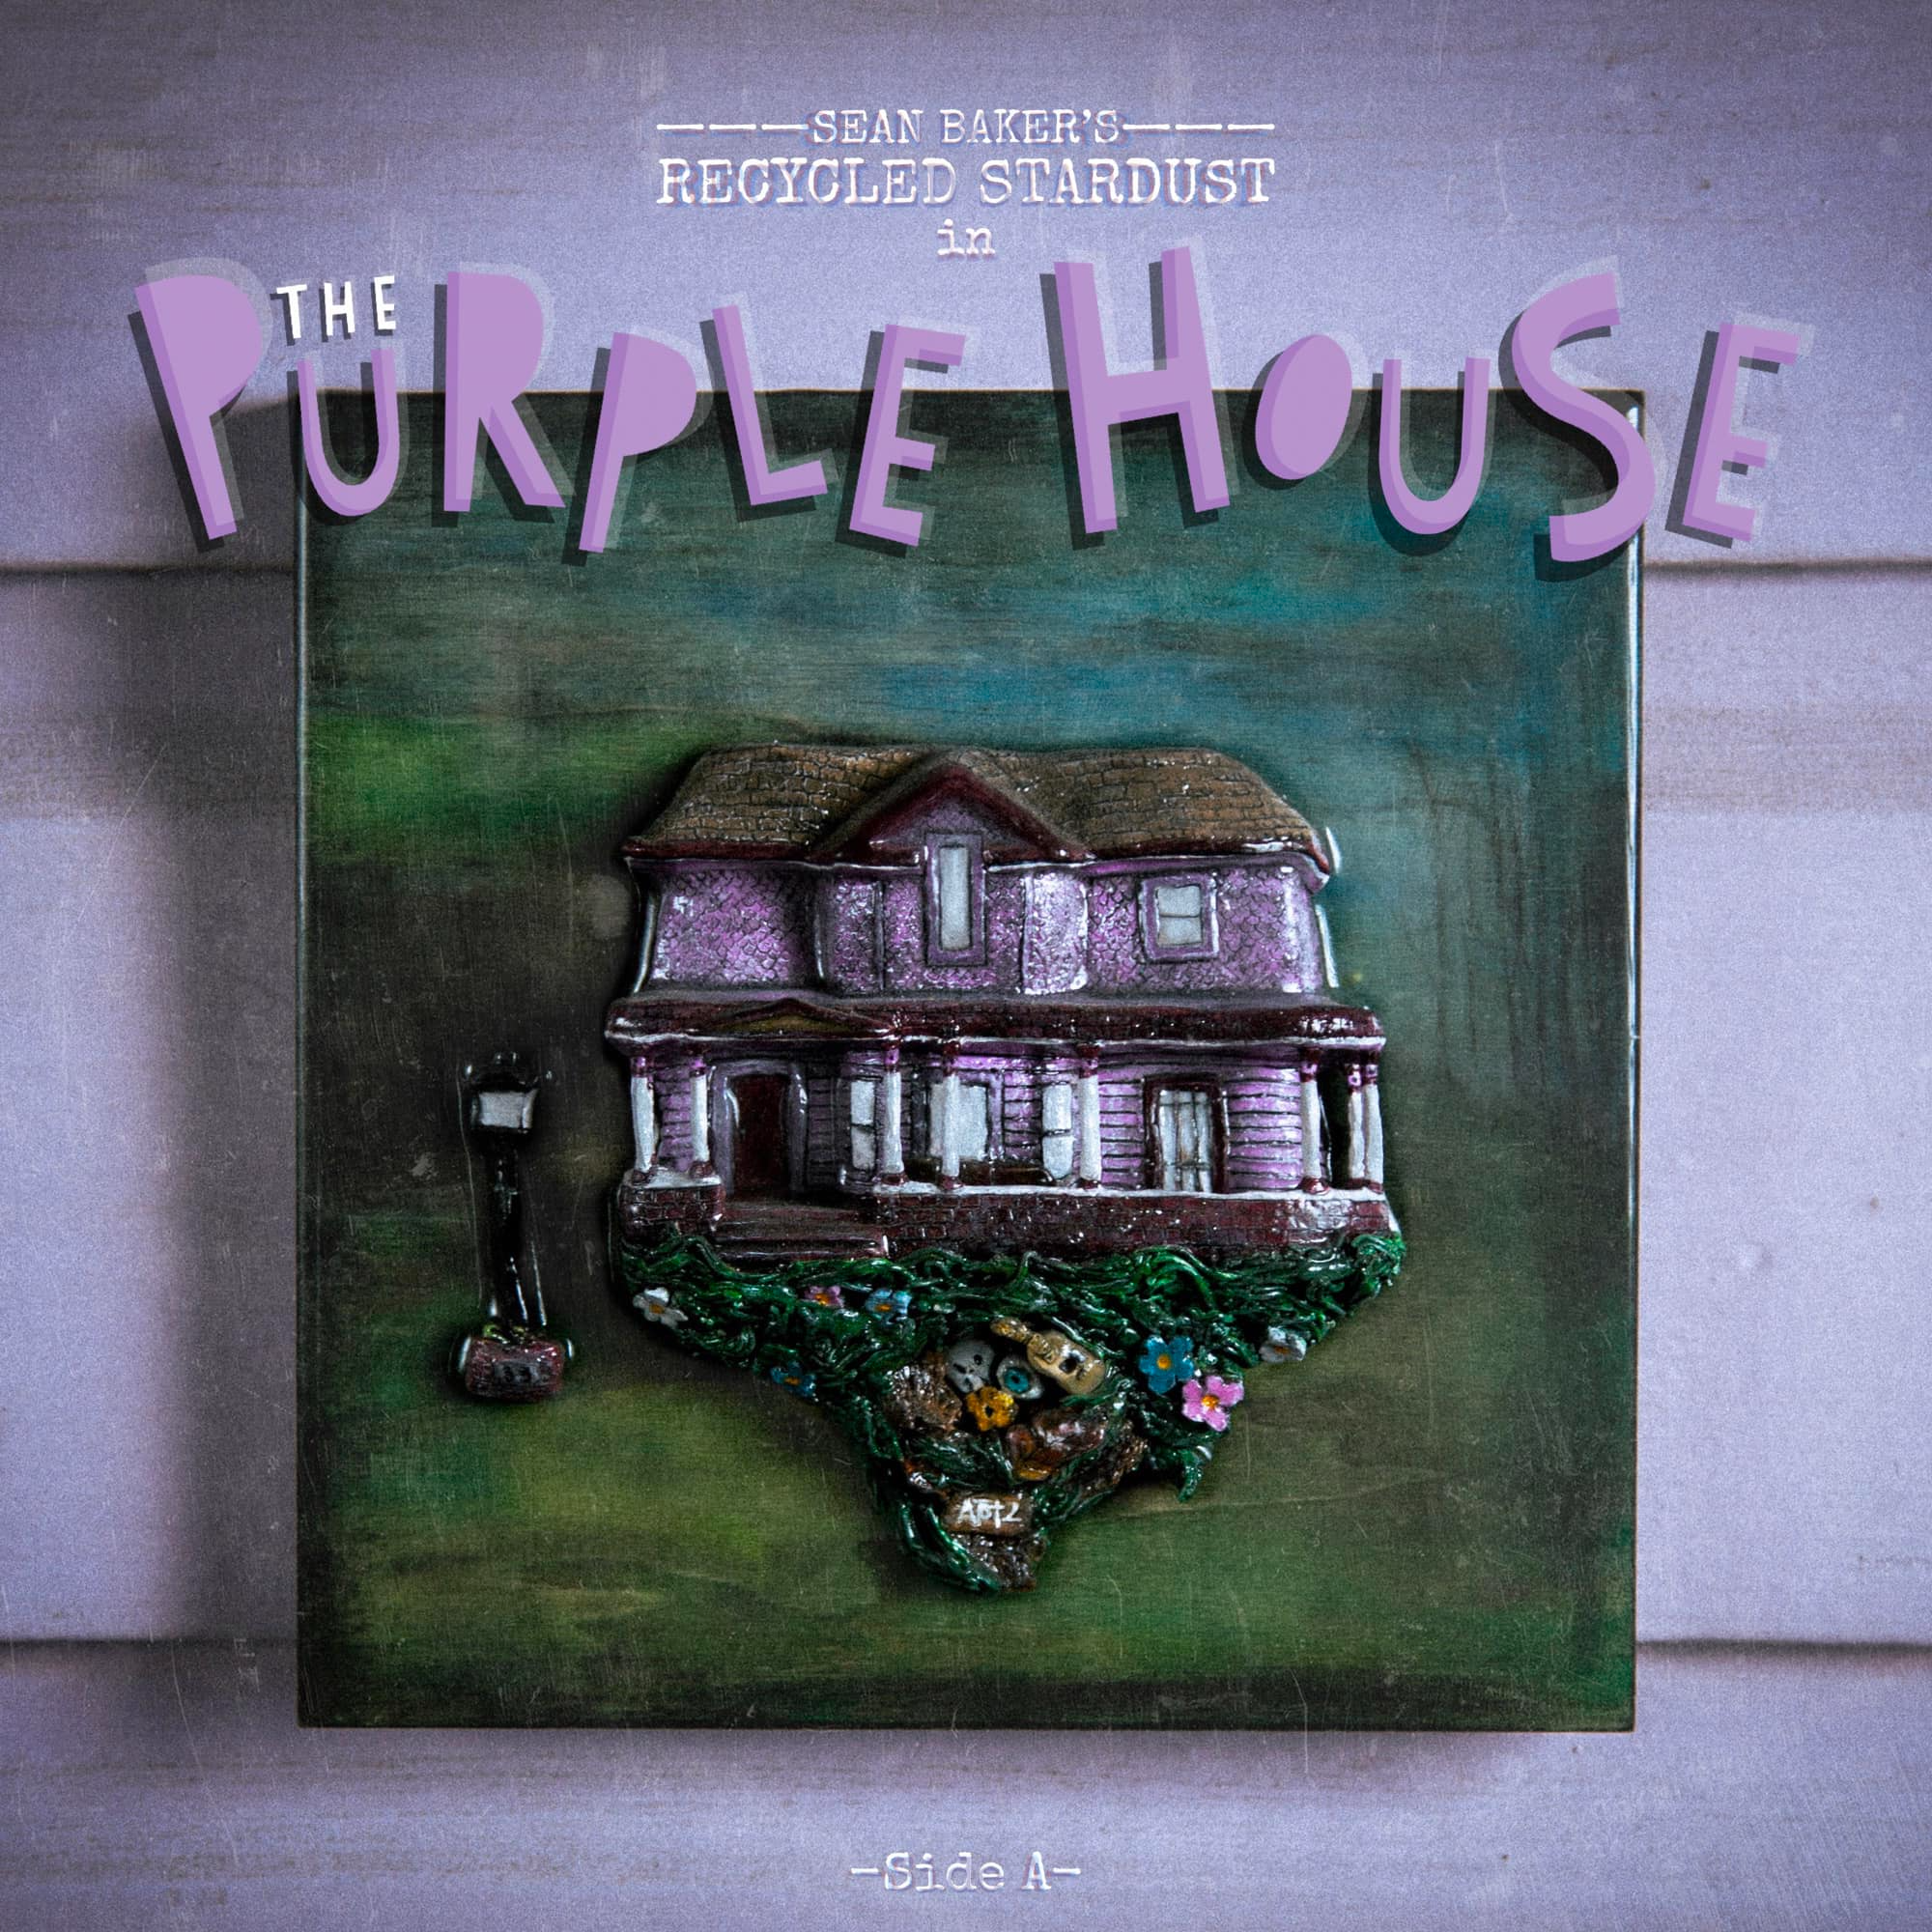 Sean Baker's Recycled Stardust | The Purple House | TalkTalkTalk Records